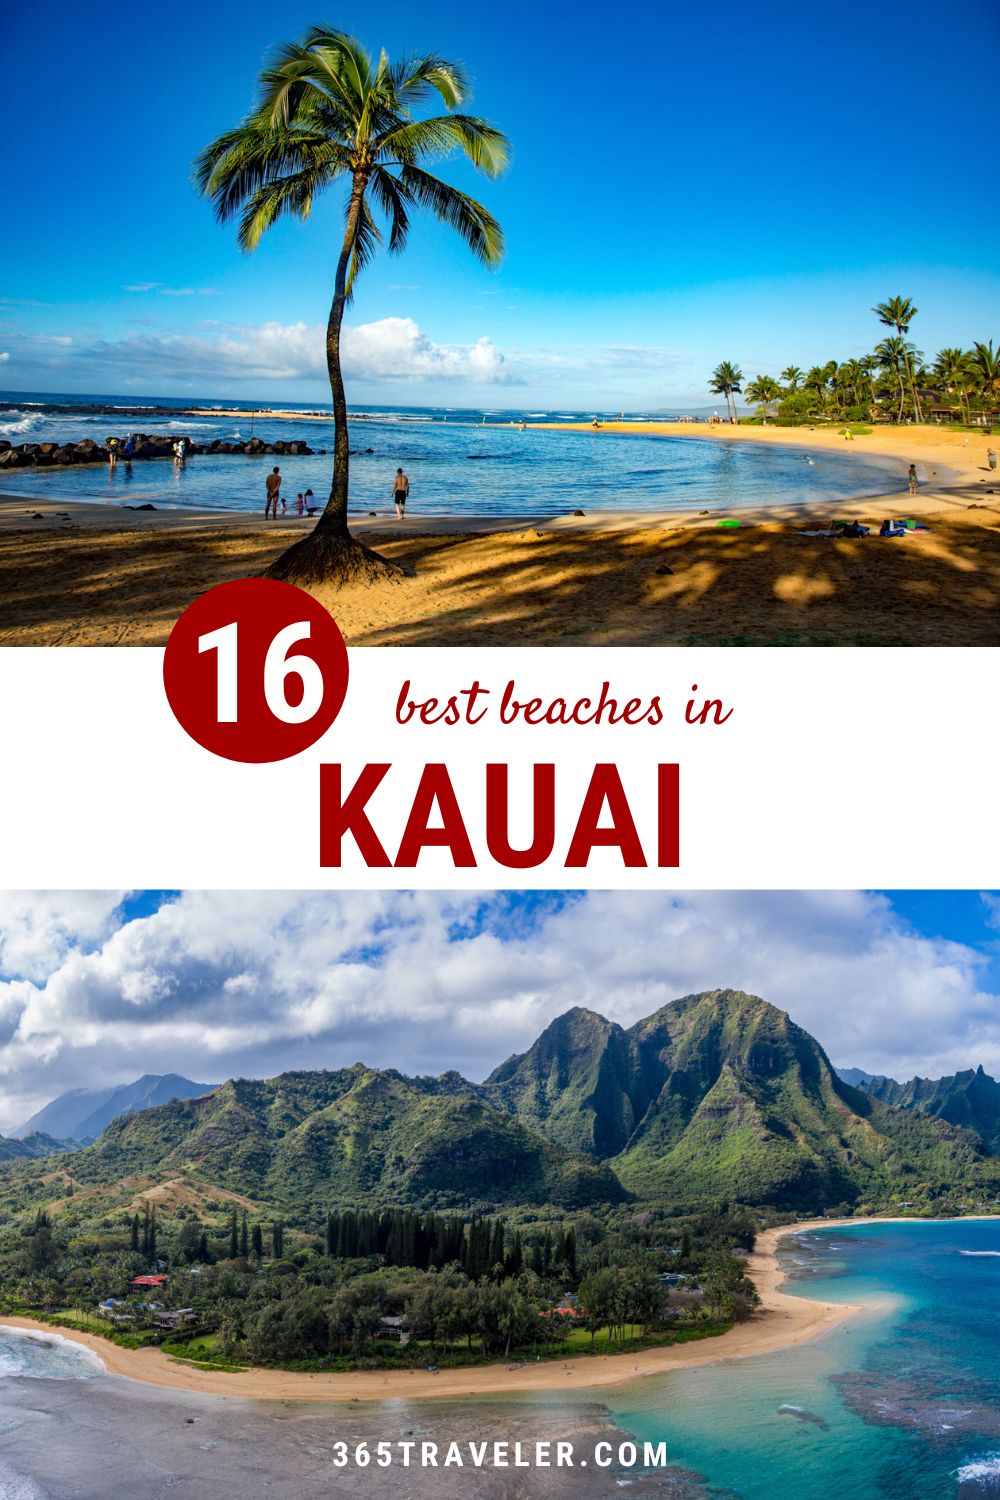 16 AWESOME KAUAI BEACHES YOU'LL ABSOLUTELY LOVE